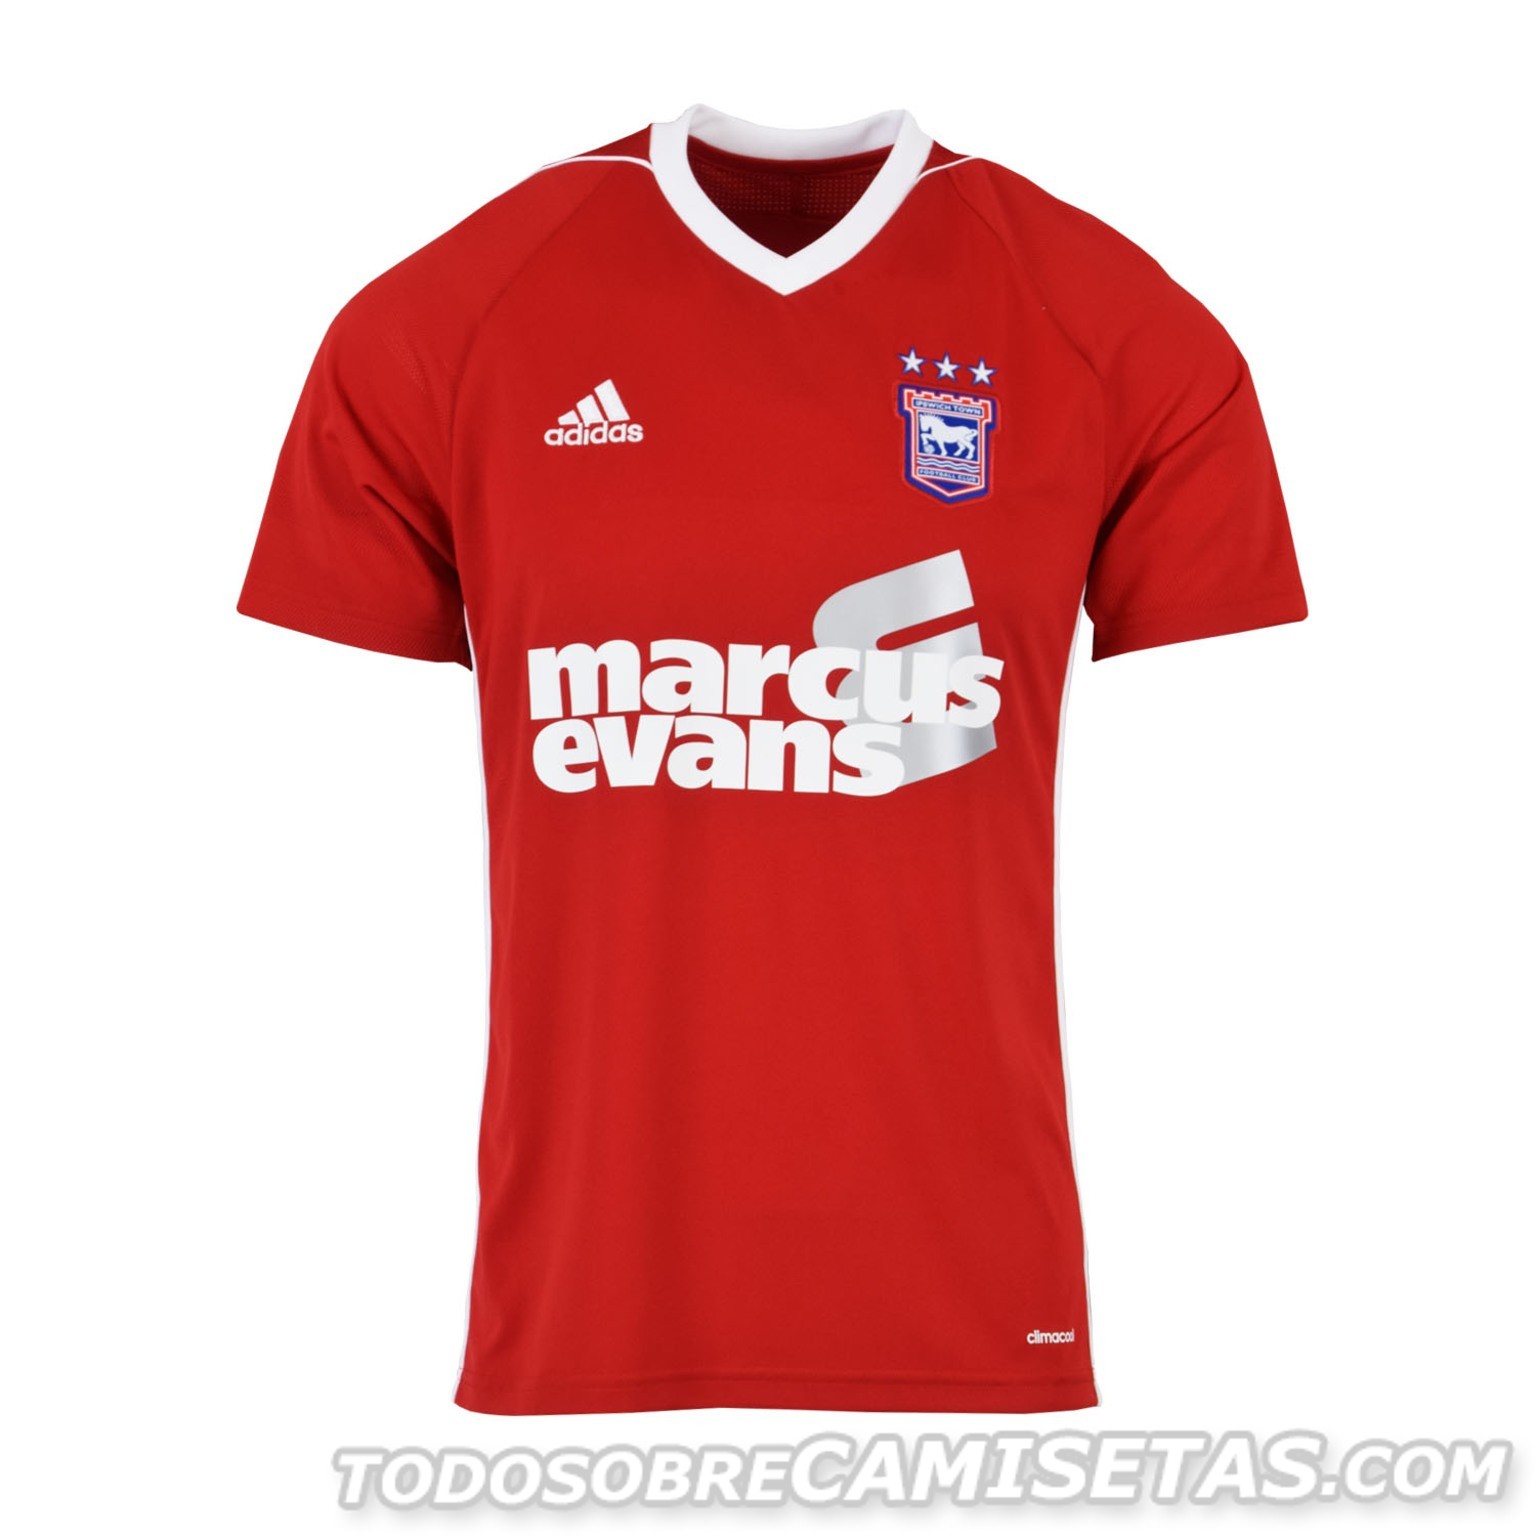 Ipswich Town FC adidas 2017-18 Away Kit